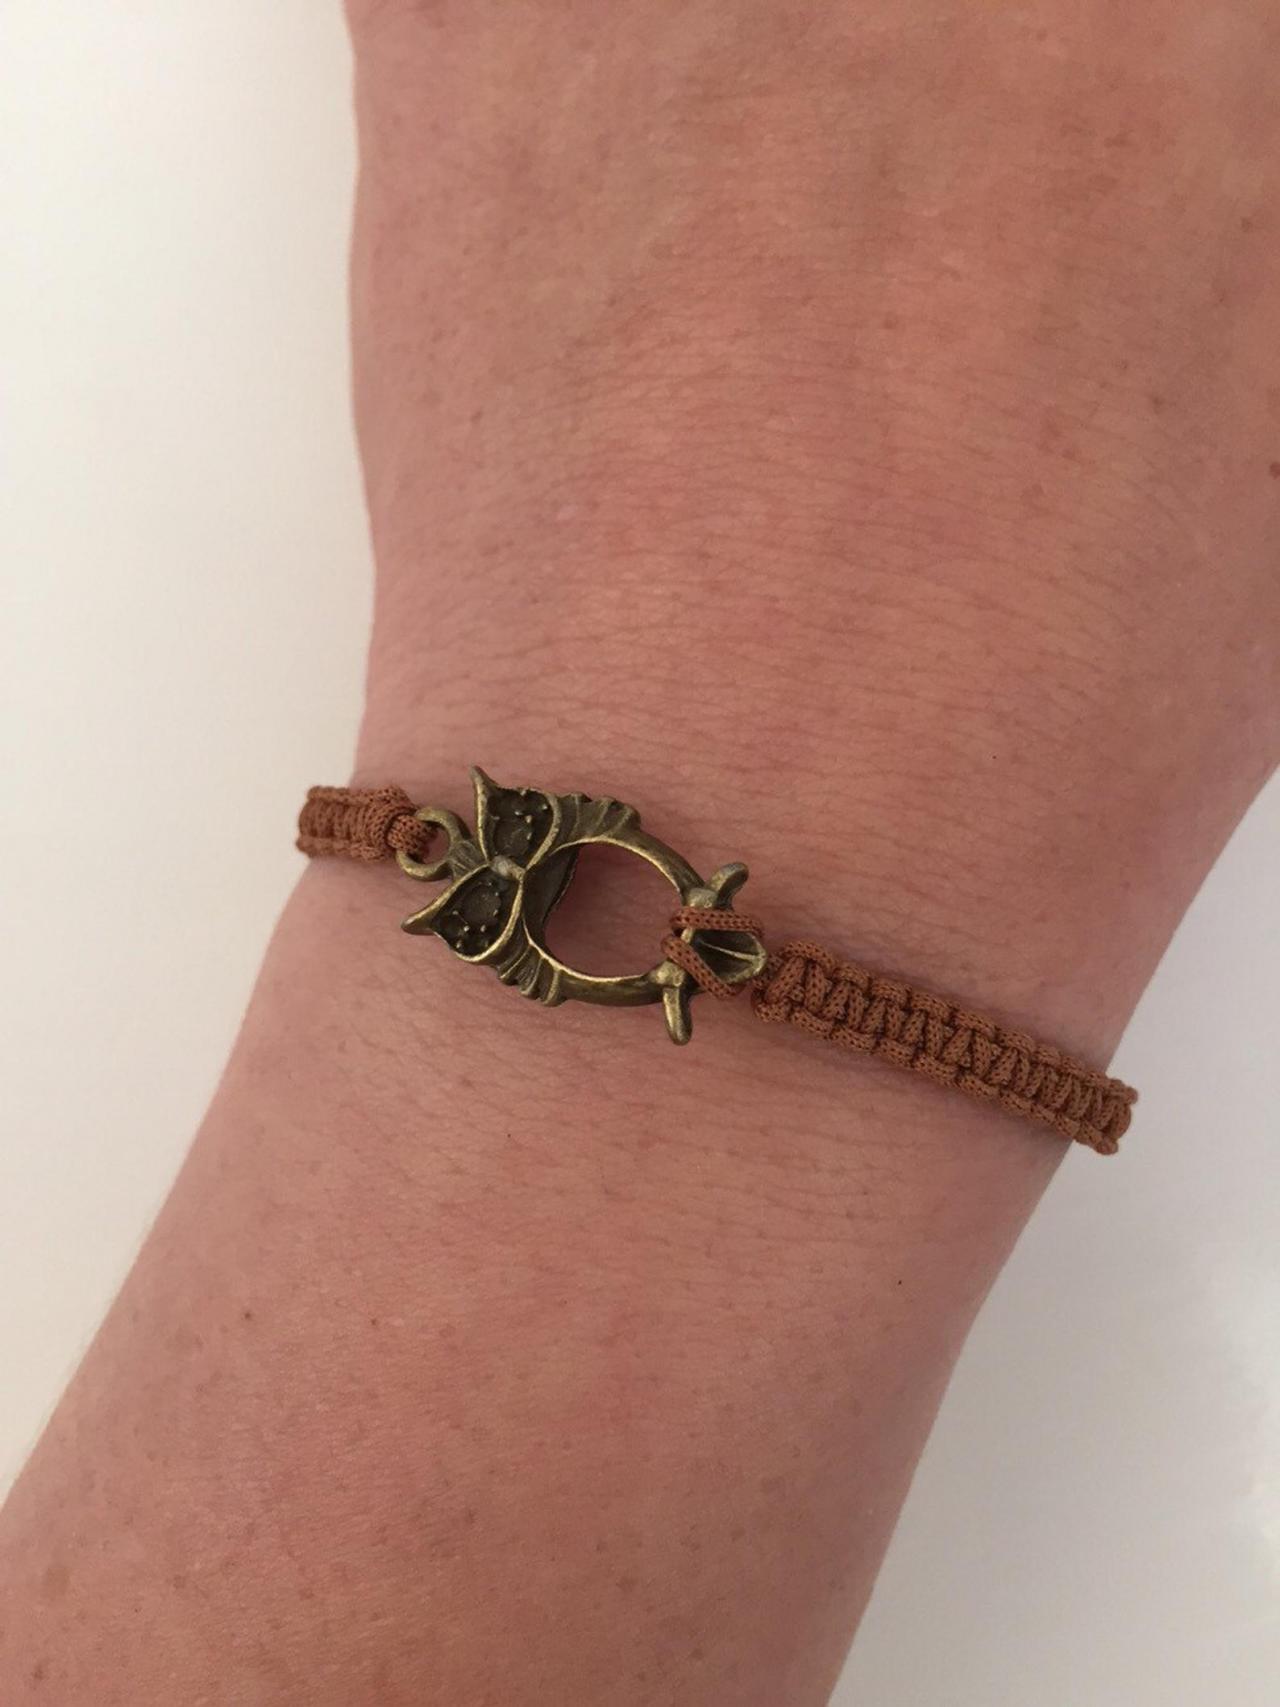 Owl Macrame Bracelet 239- owl kabbalah friendship cuff bracelet brown alloy metal bronze beads gift adjustable current